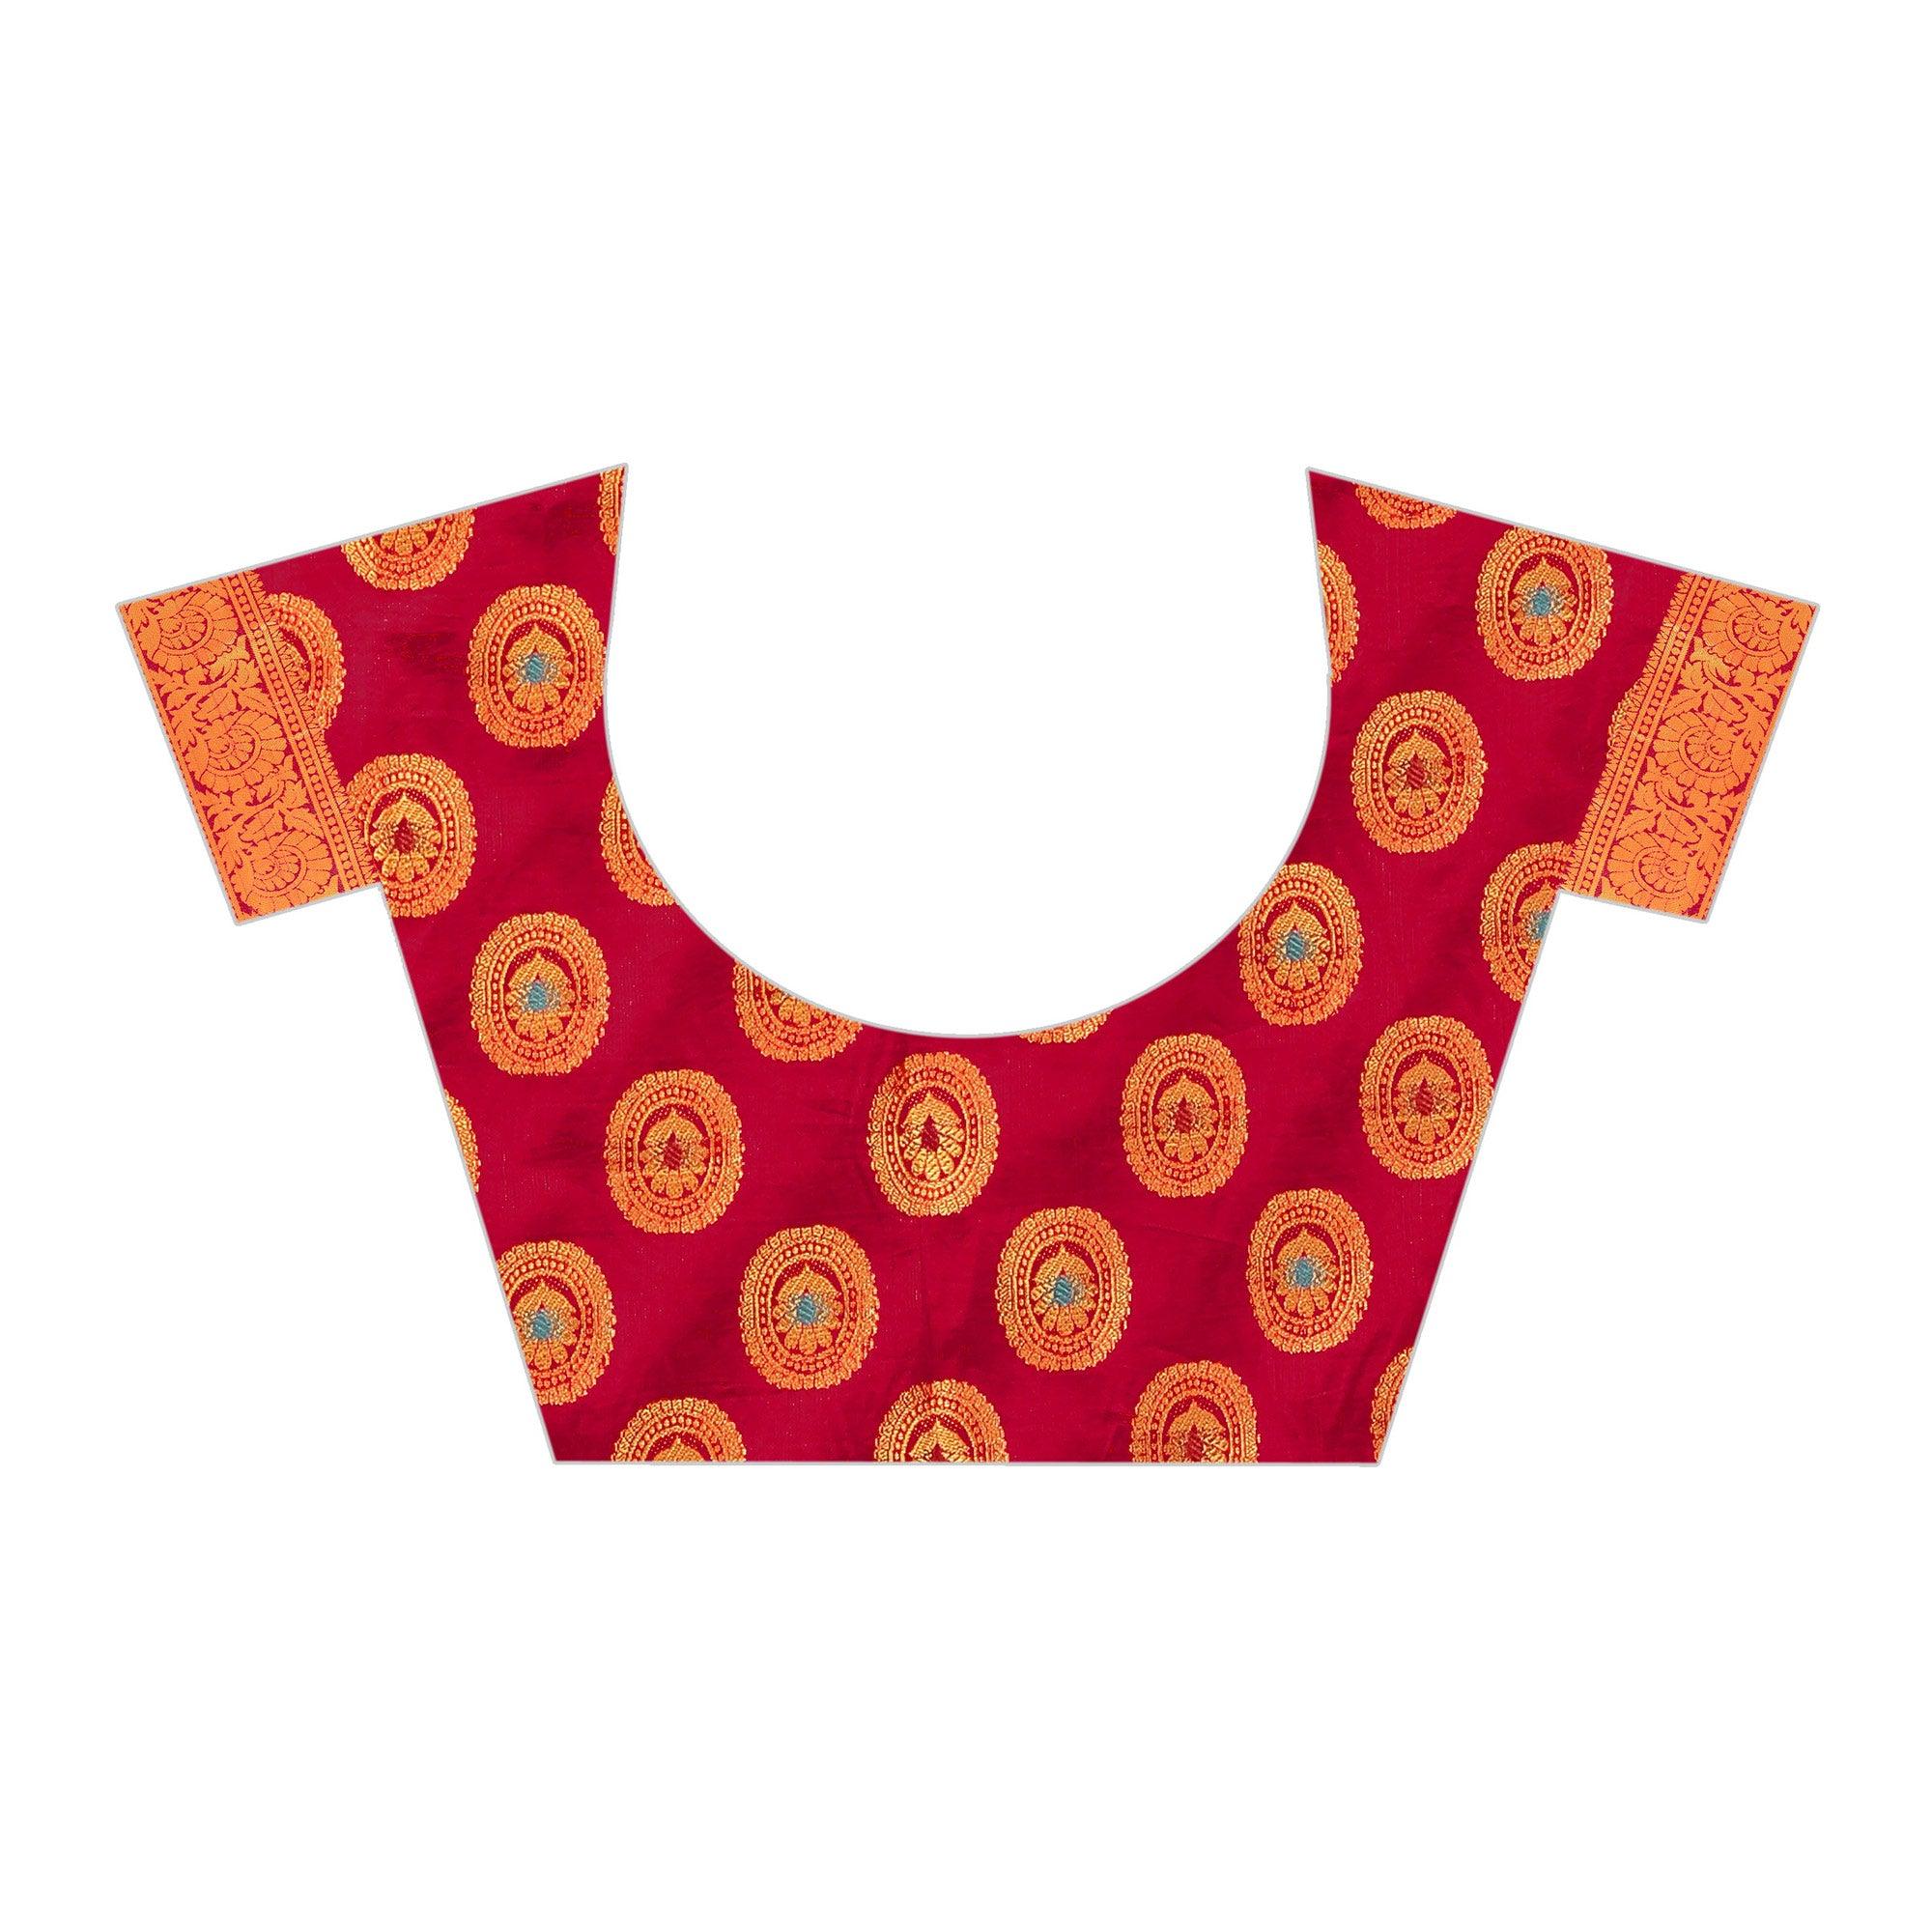 Pleasance Orange Colored Festive Wear Woven Art Silk Saree - Peachmode